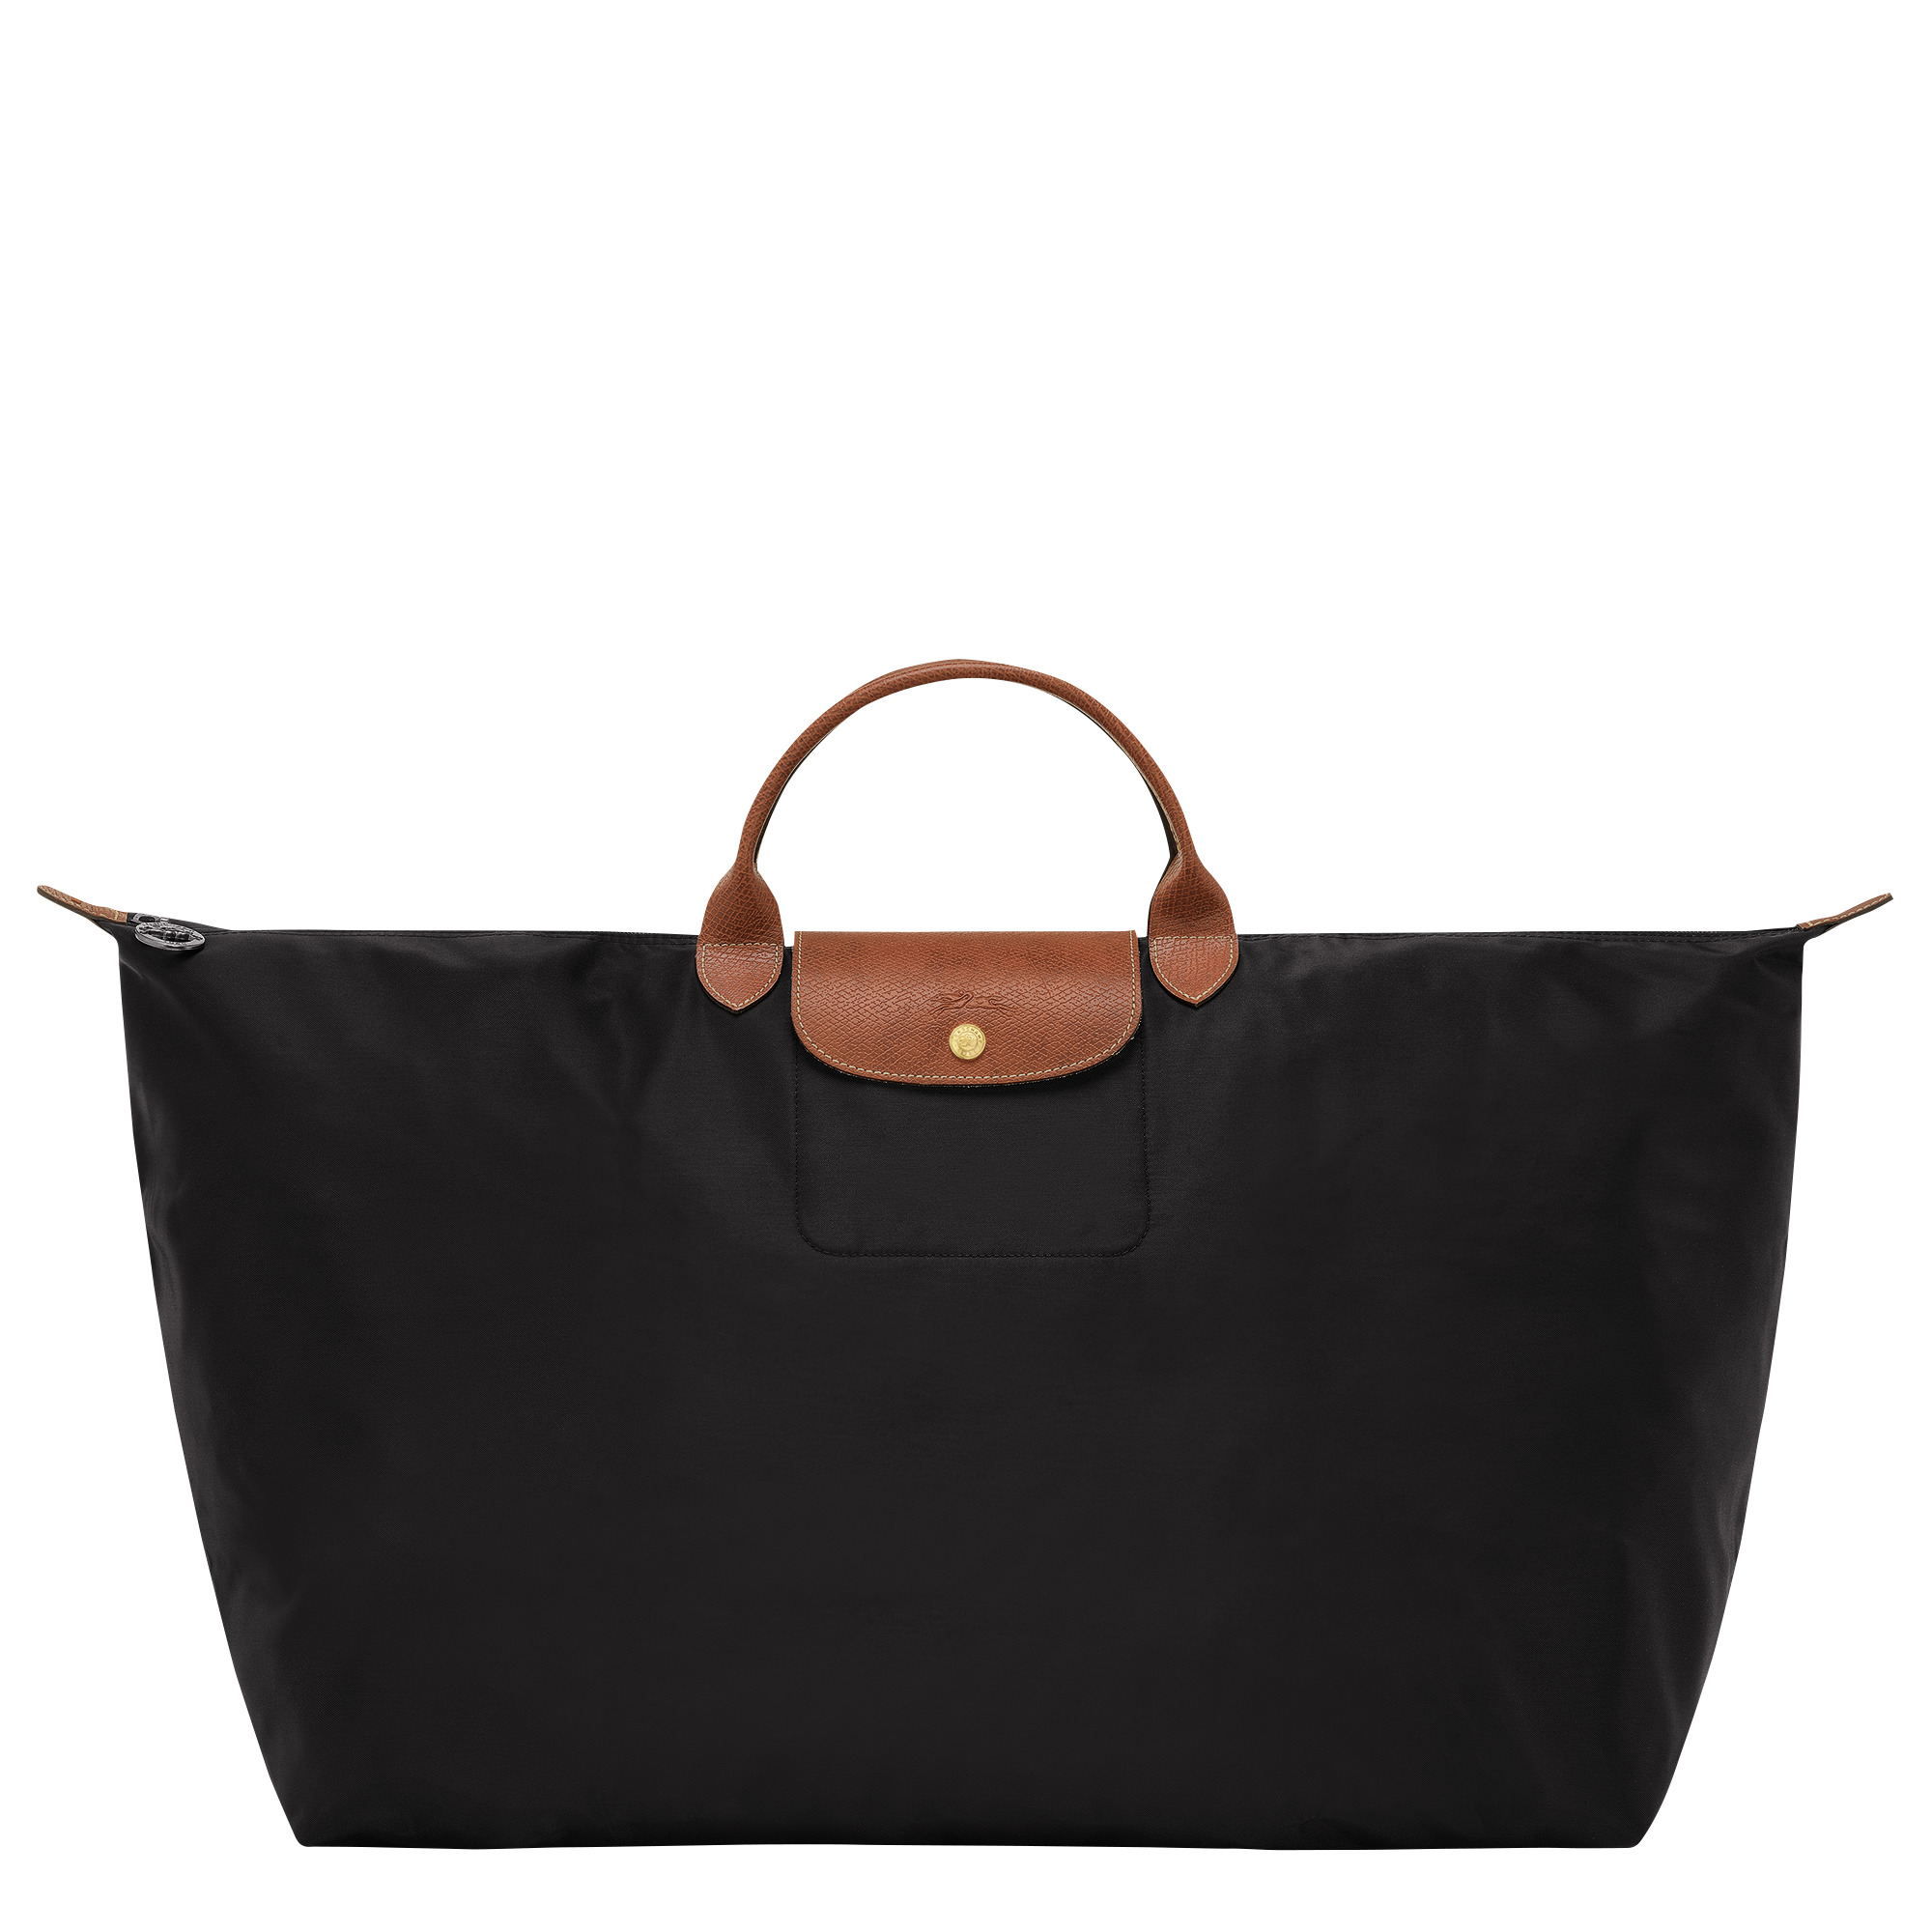 Le Pliage Original M Travel bag Black - Recycled canvas - 1